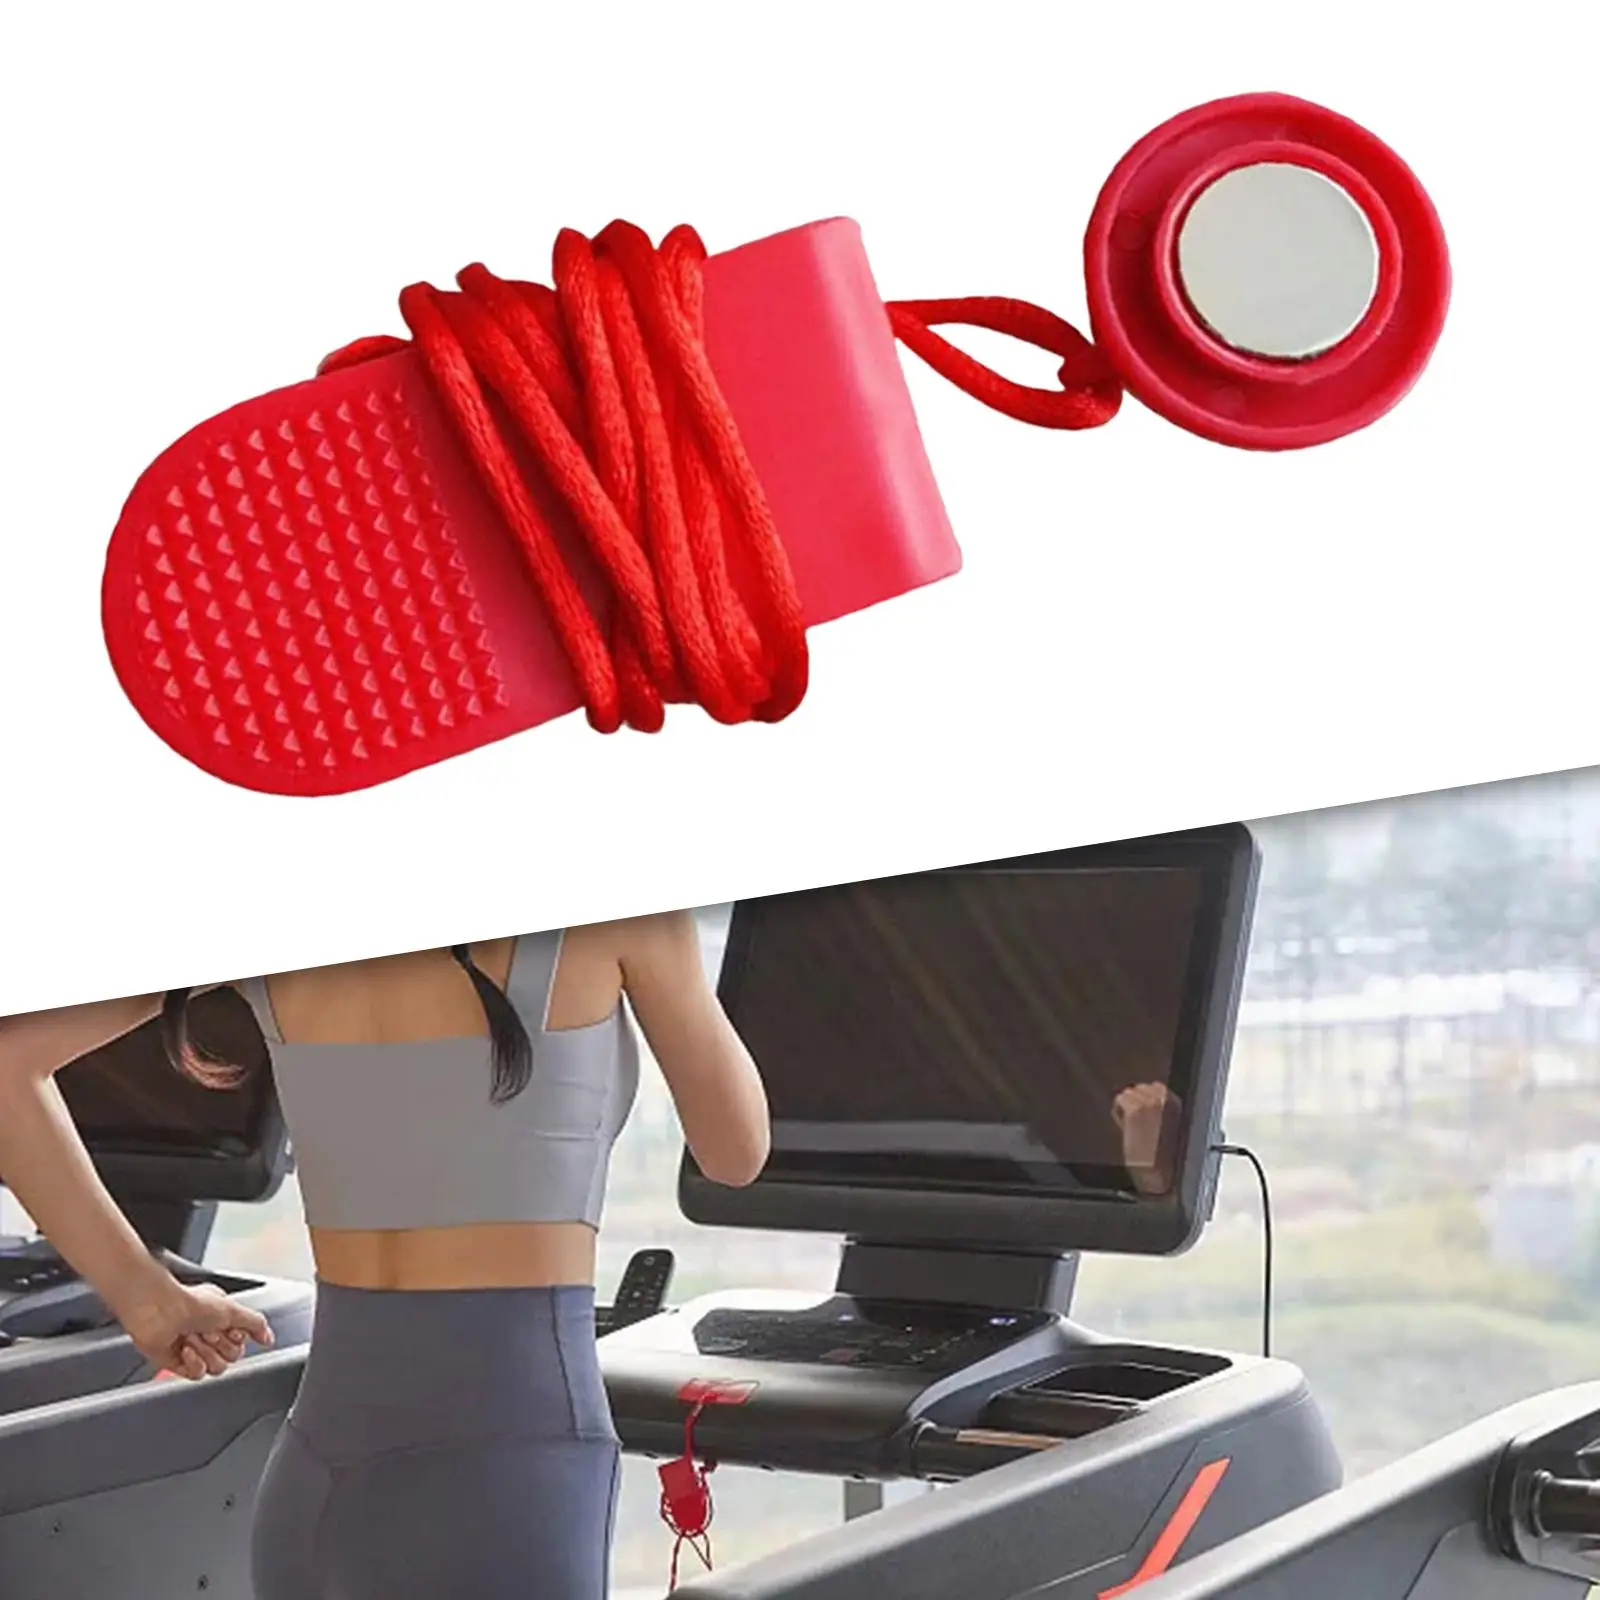 Treadmill Safety Key Magnet Lightweight Universal Security Lock Tool for Running